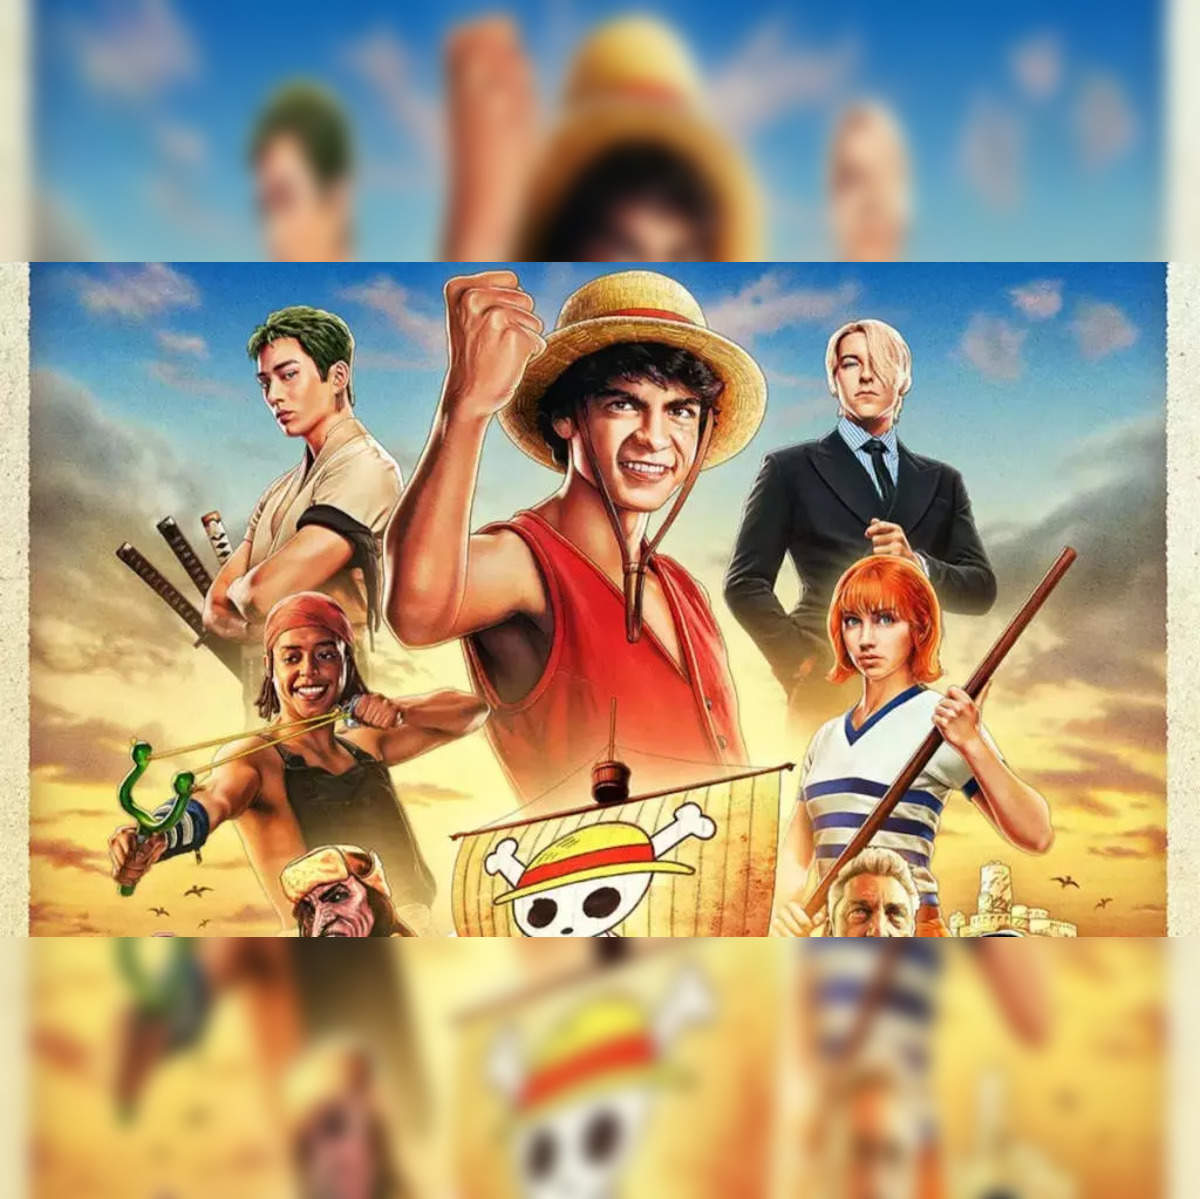 Download Cowboy Nami One Piece Anime Wallpaper